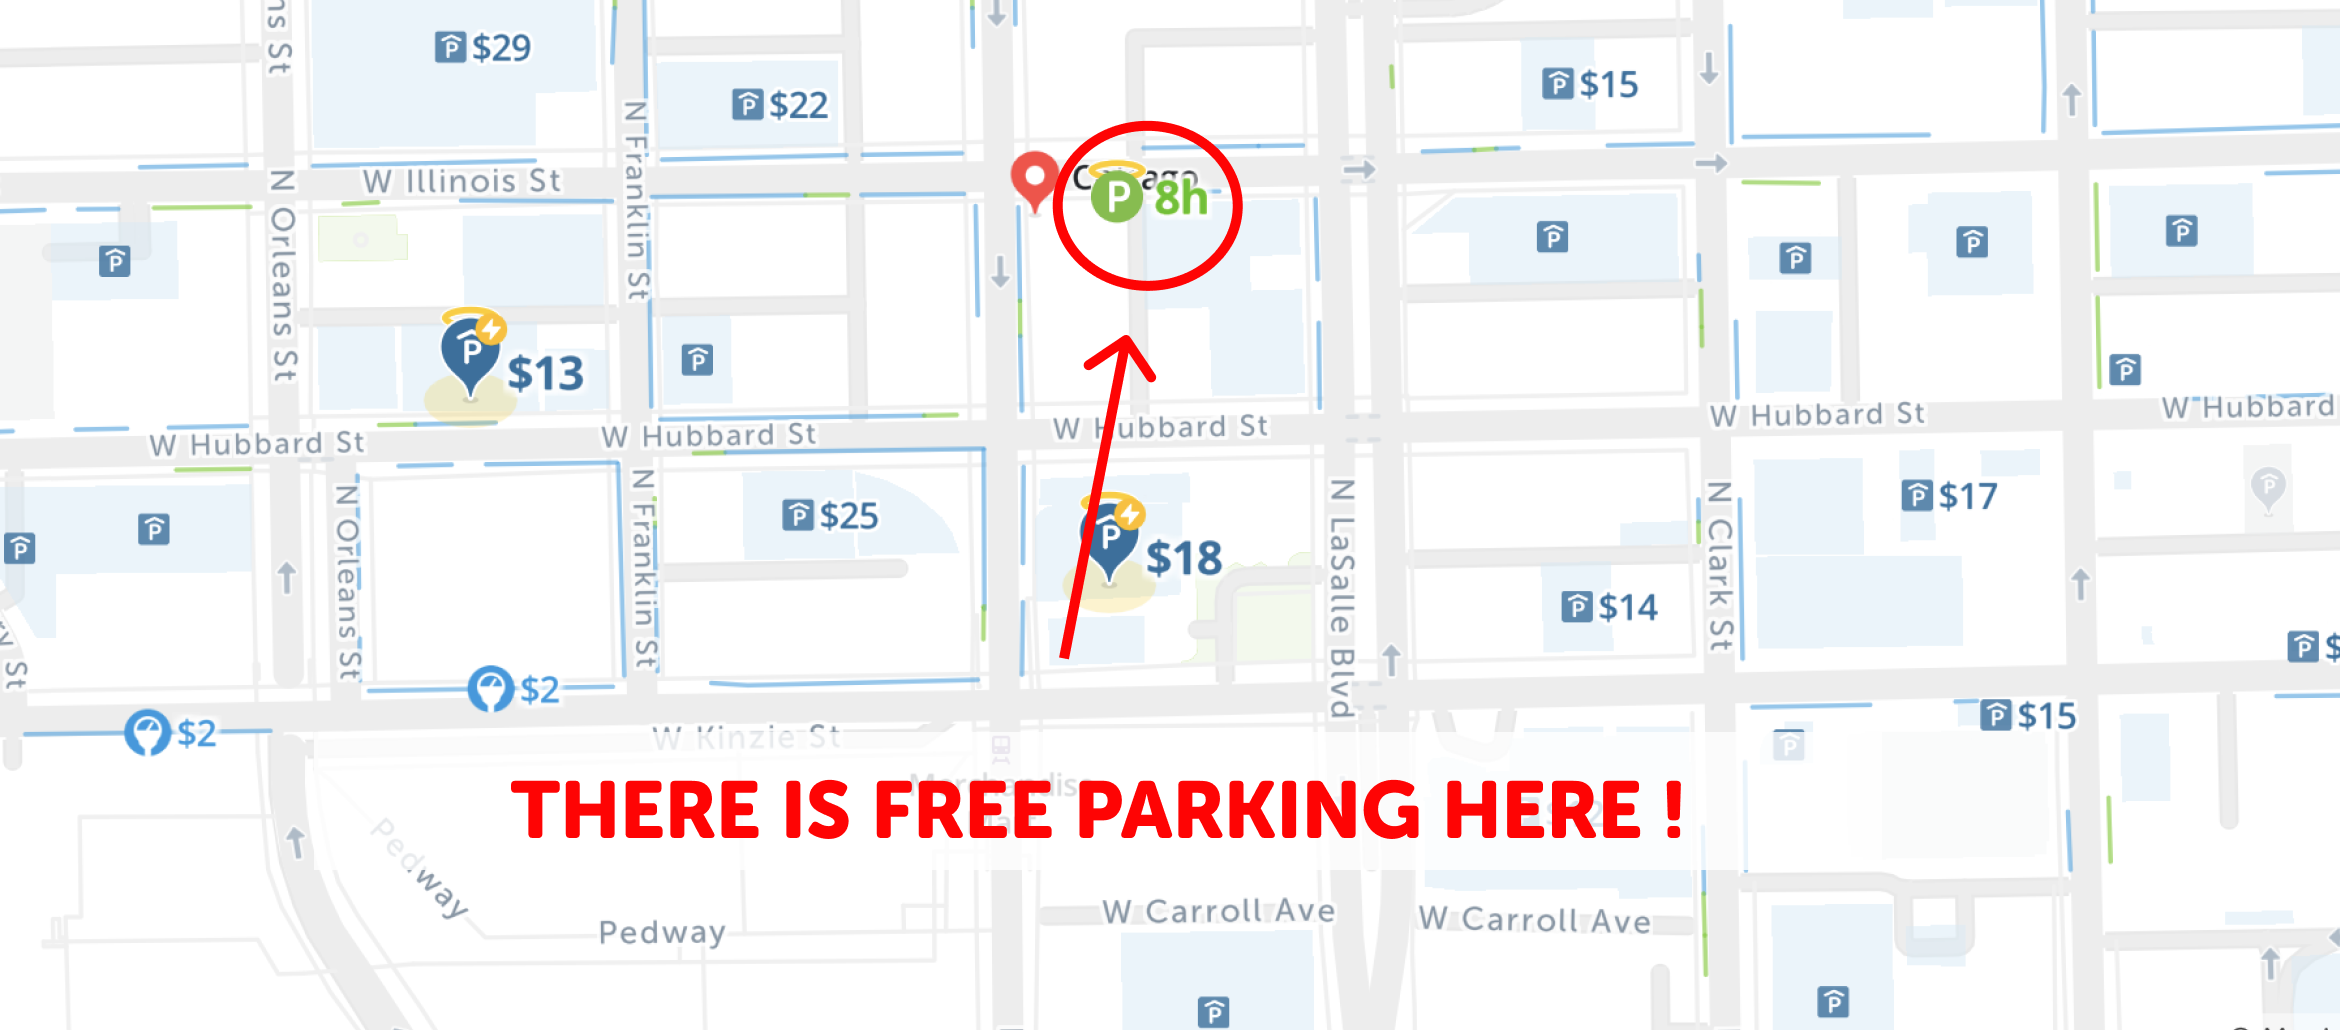 21 Map Of Free Parking In Chicago Spotangels